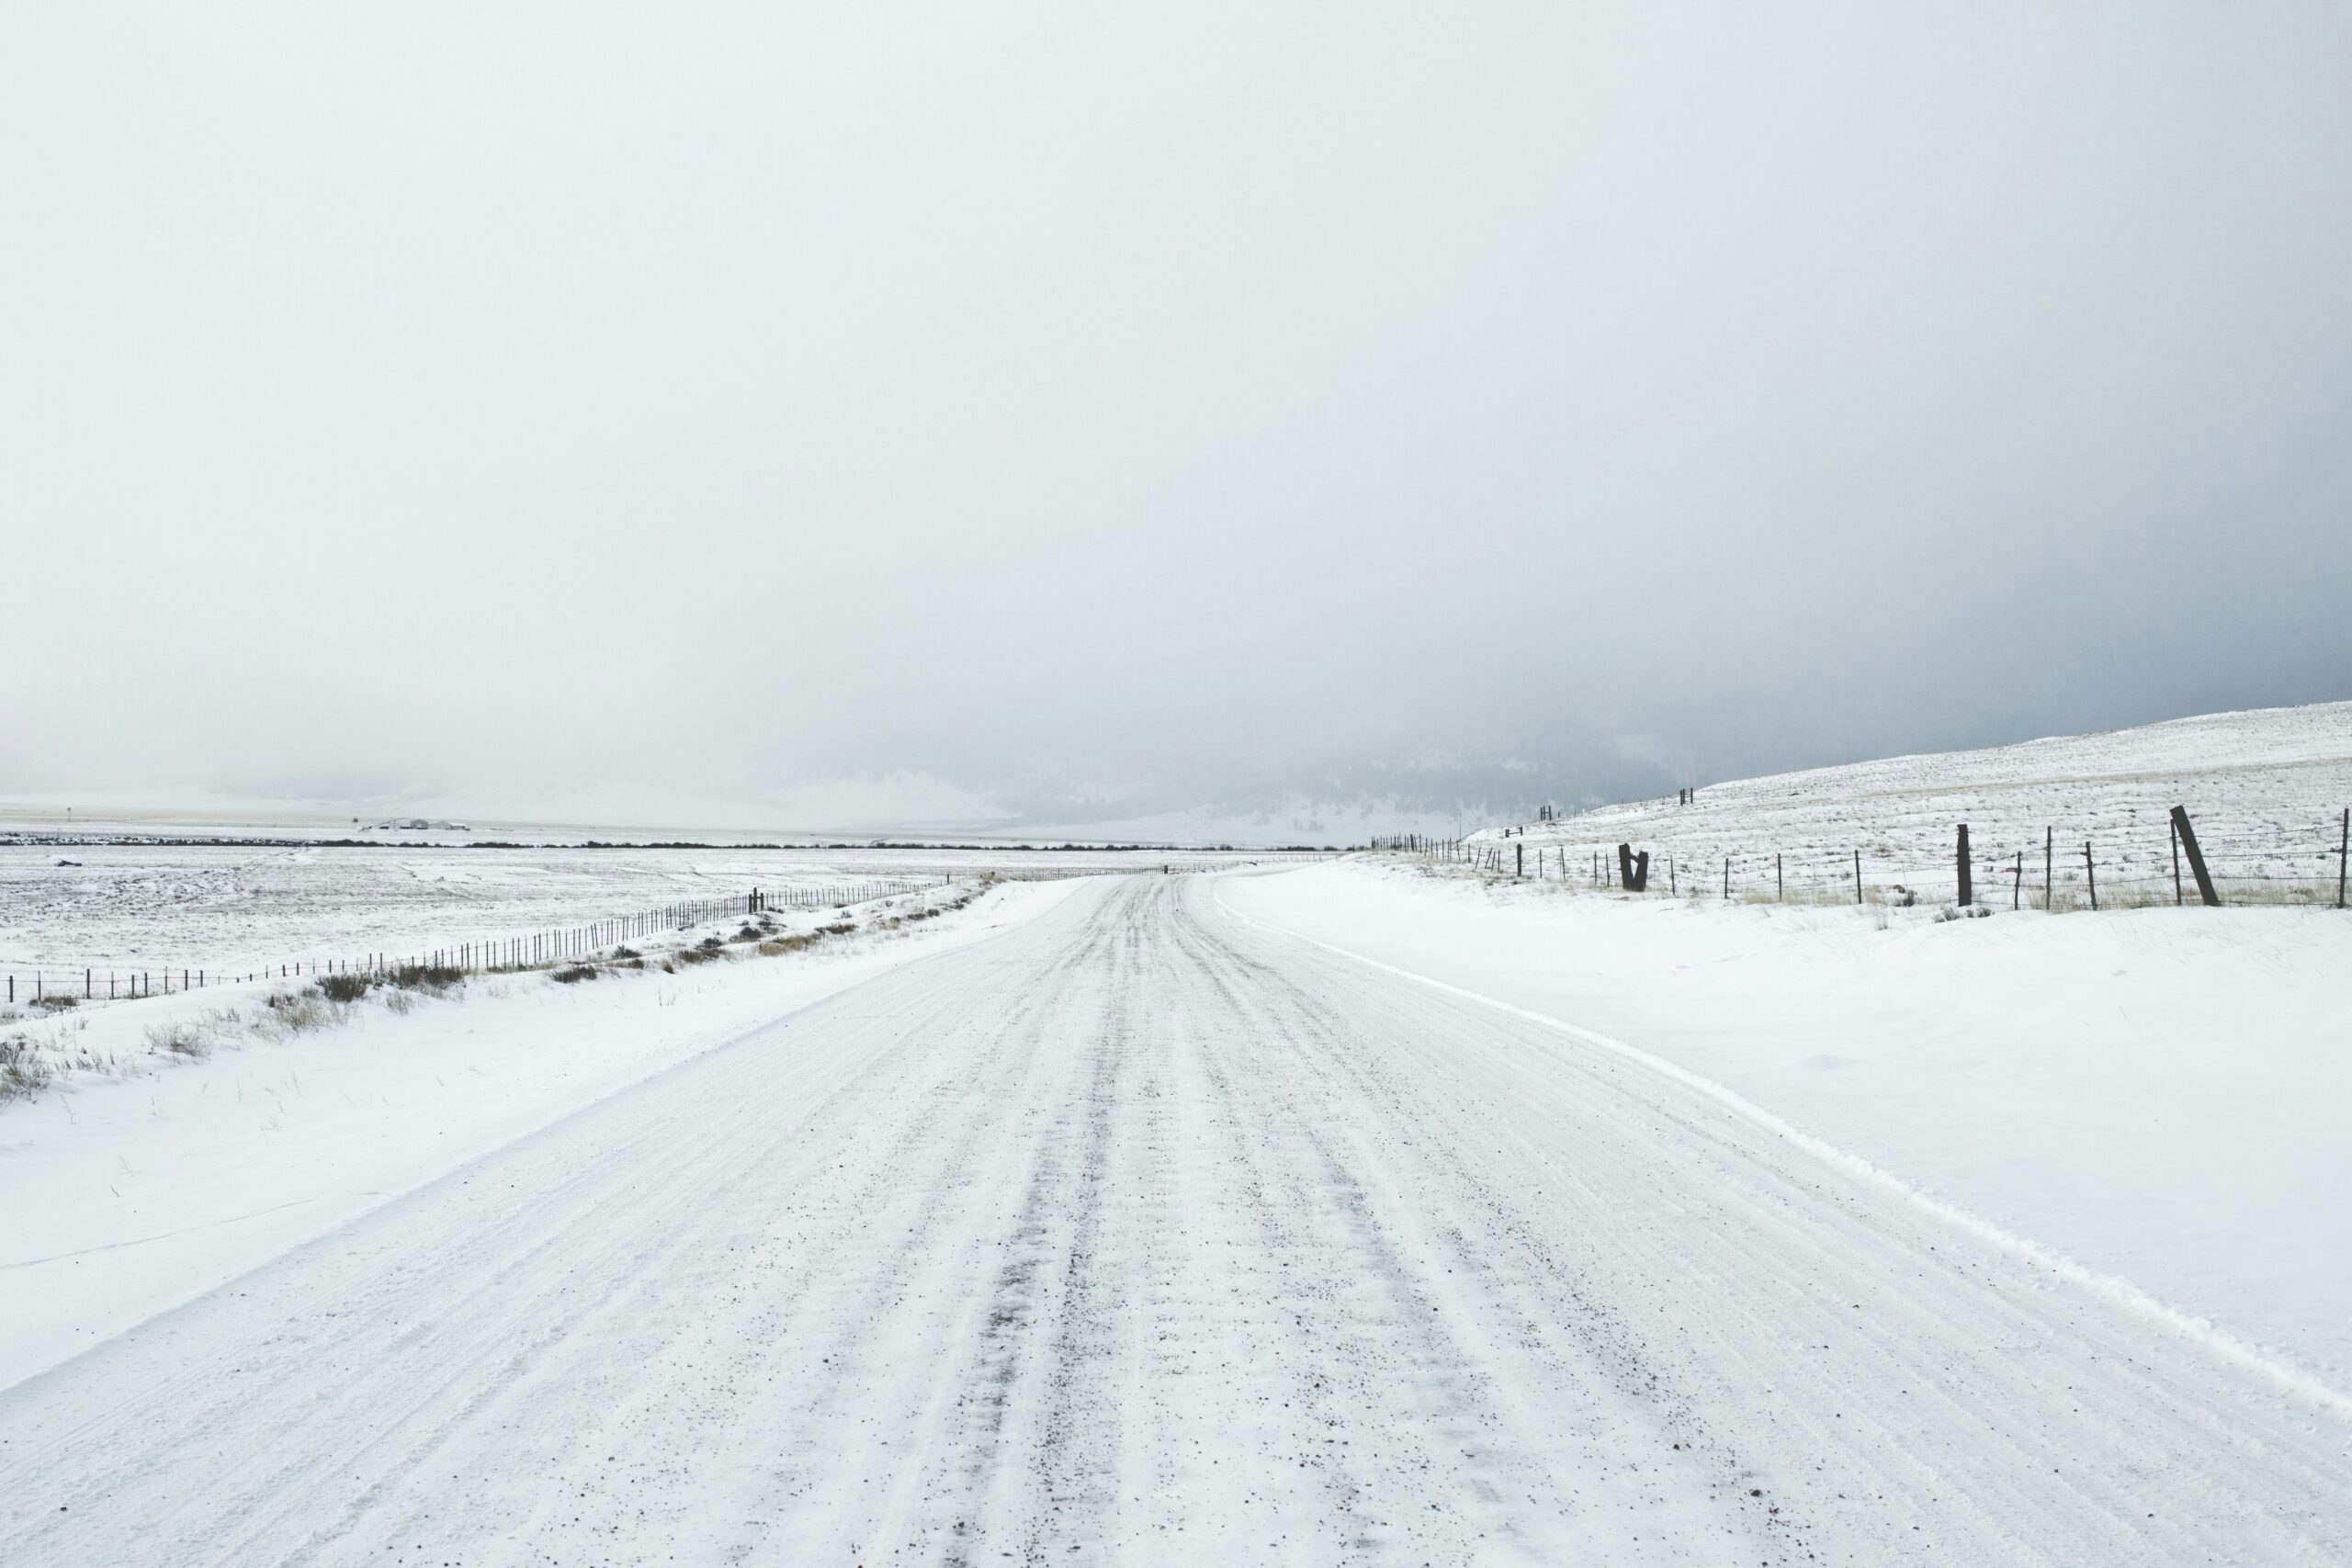 Snowy roads Wyoming propane trucks scaled